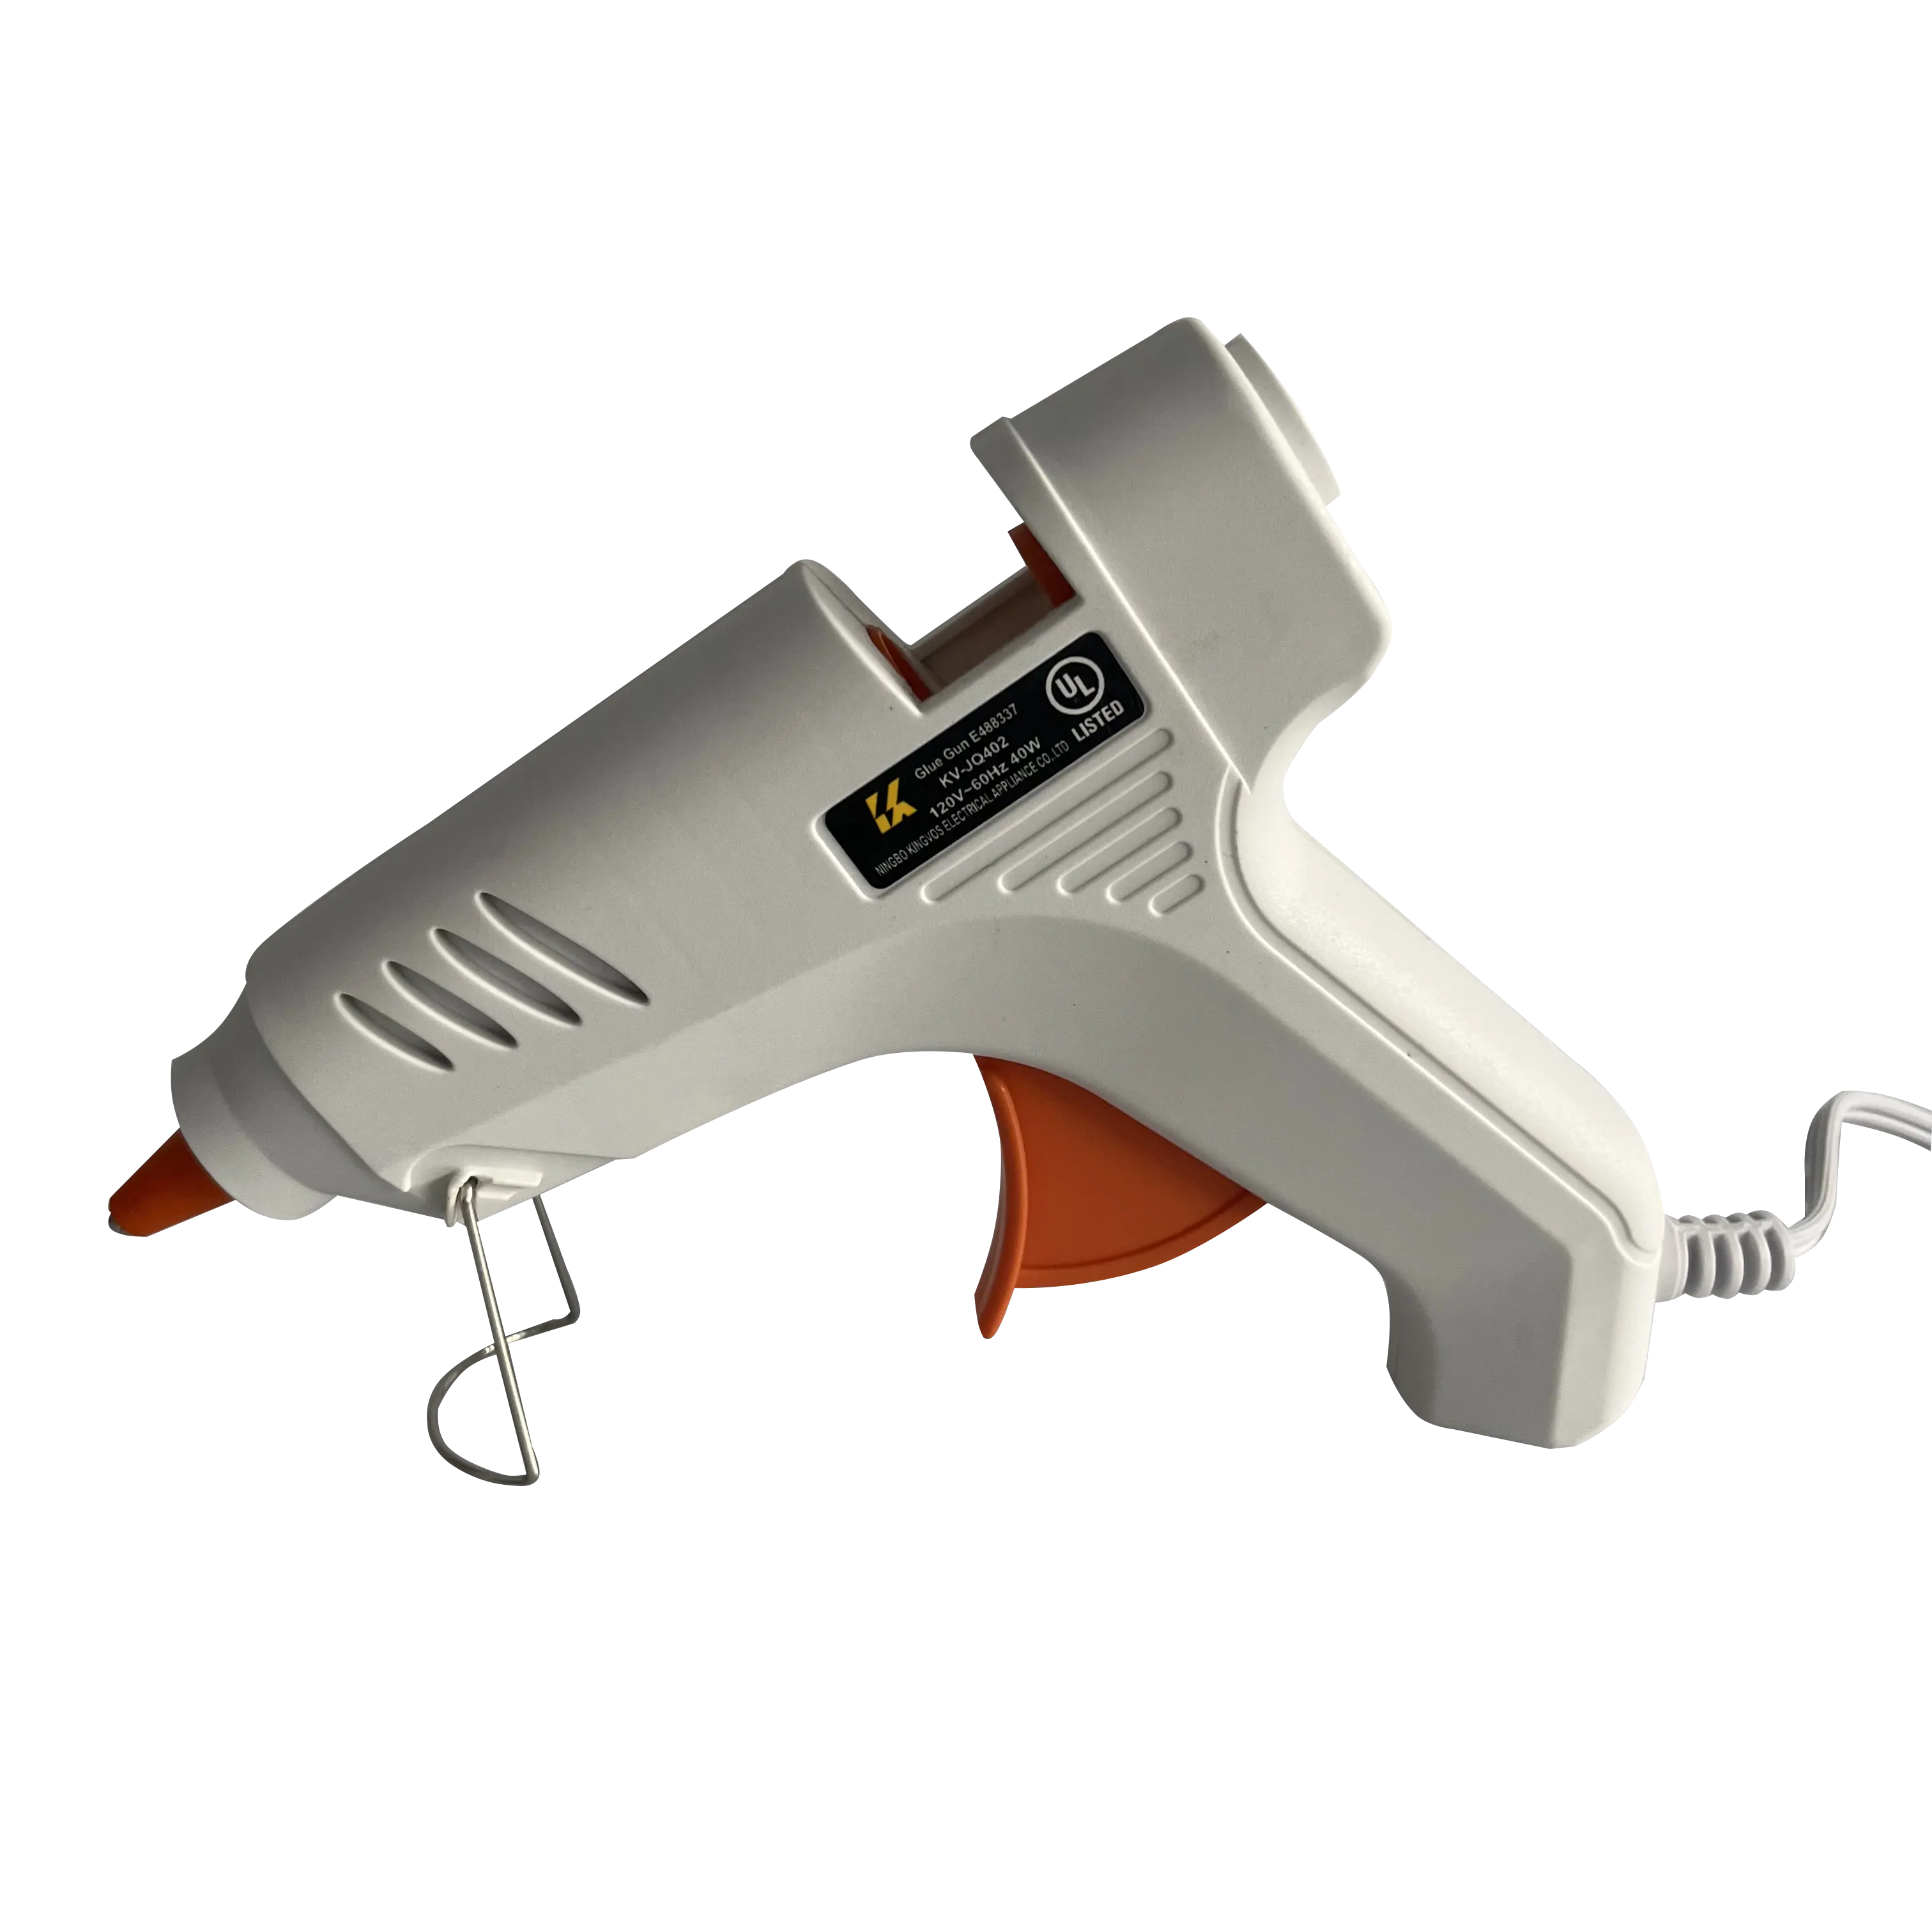 40W full size White Glue Gun KV-JQ402 with 2pcs Hot Melt Glue Sticks for Crafts School Home Repair DIY Hand Tools